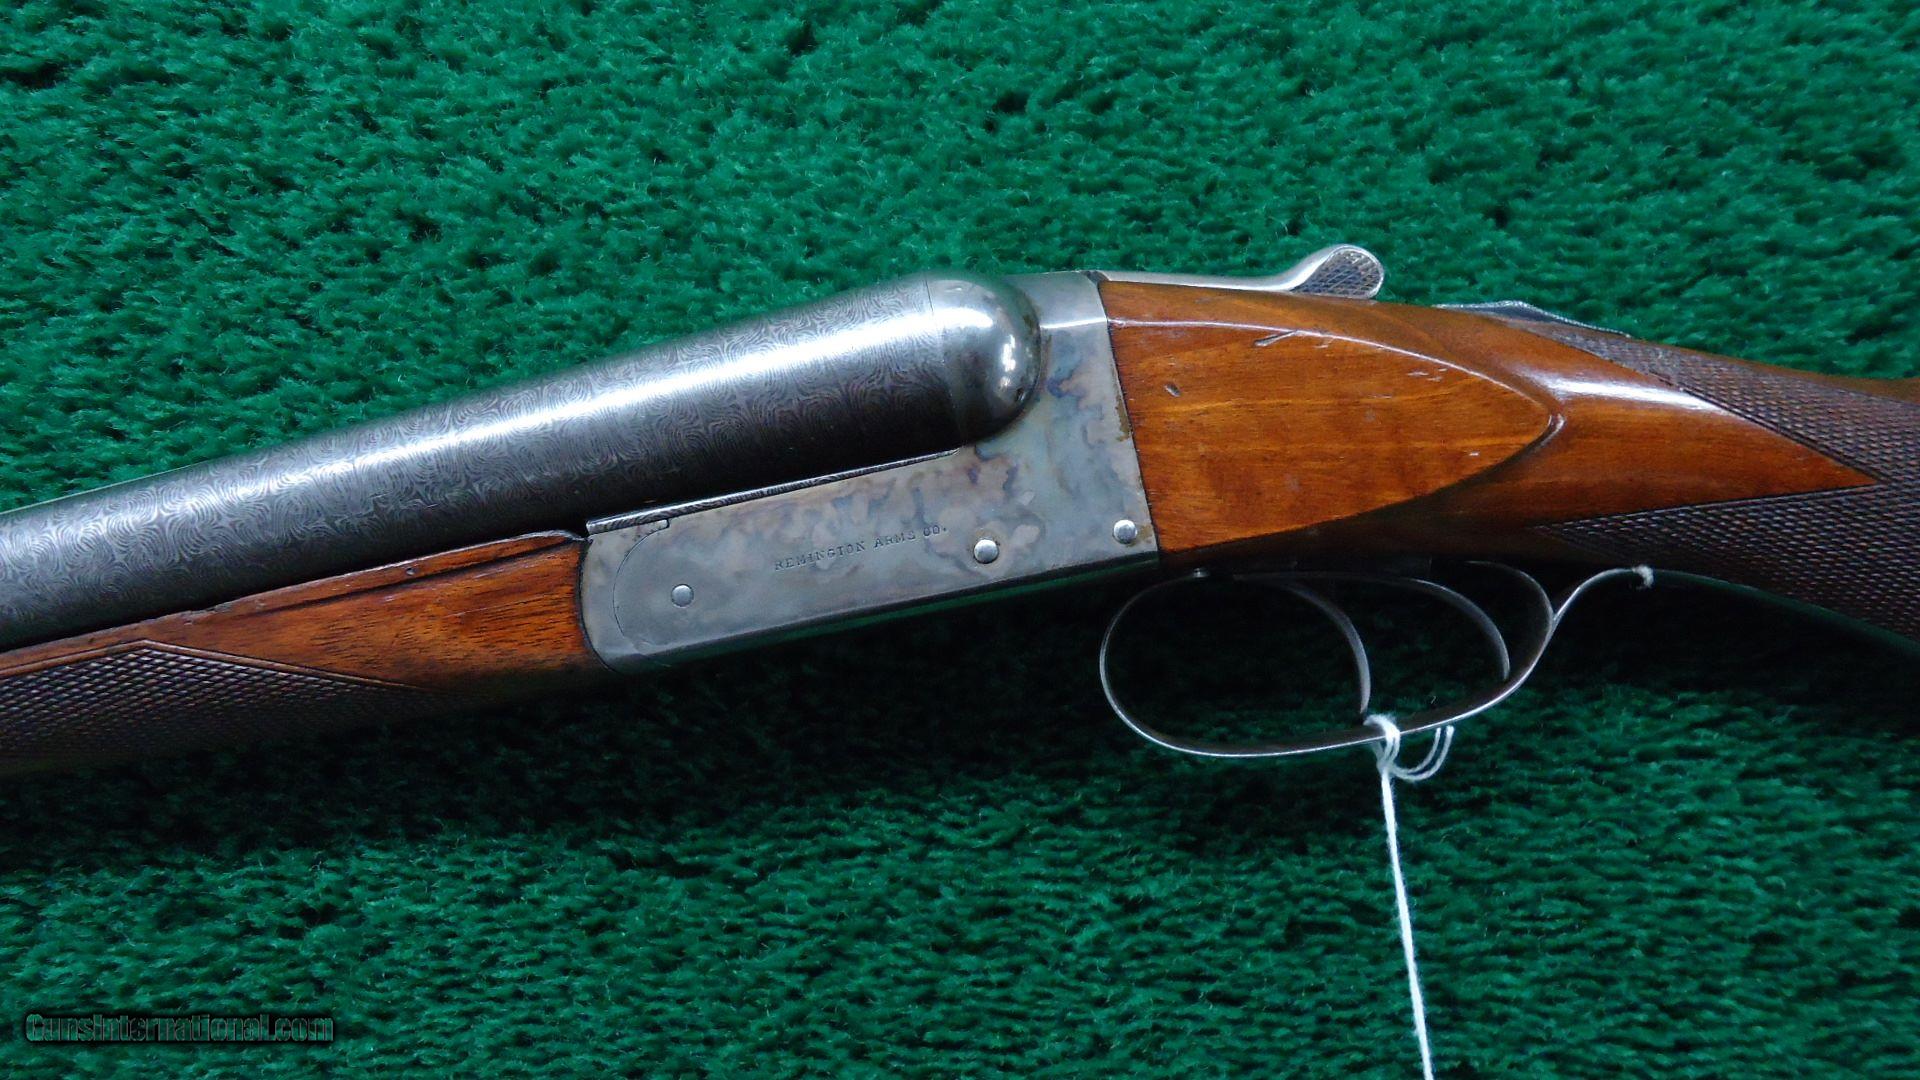 Remington 12 Gauge Double Barrel Shotgun